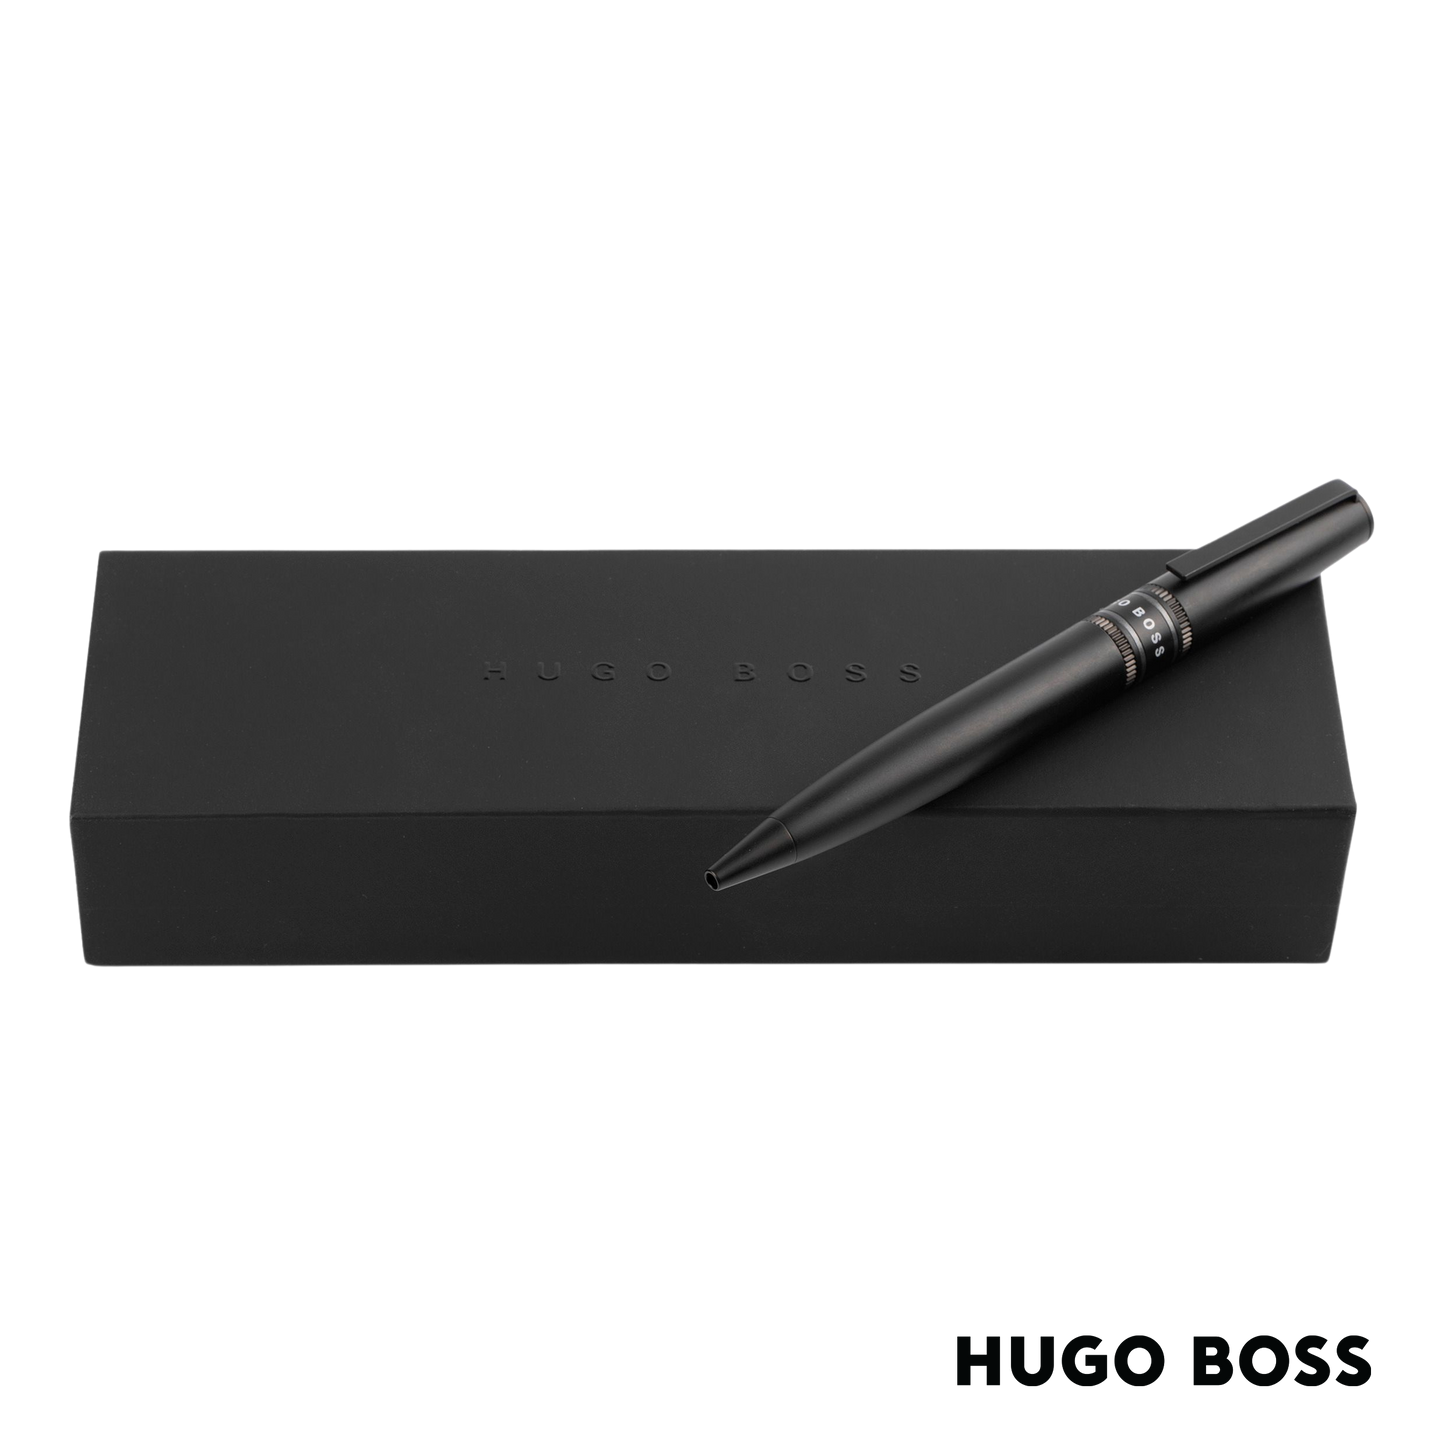 Hugo Boss Pen Illusion Gear Black Ballpoint (HSV2124A)